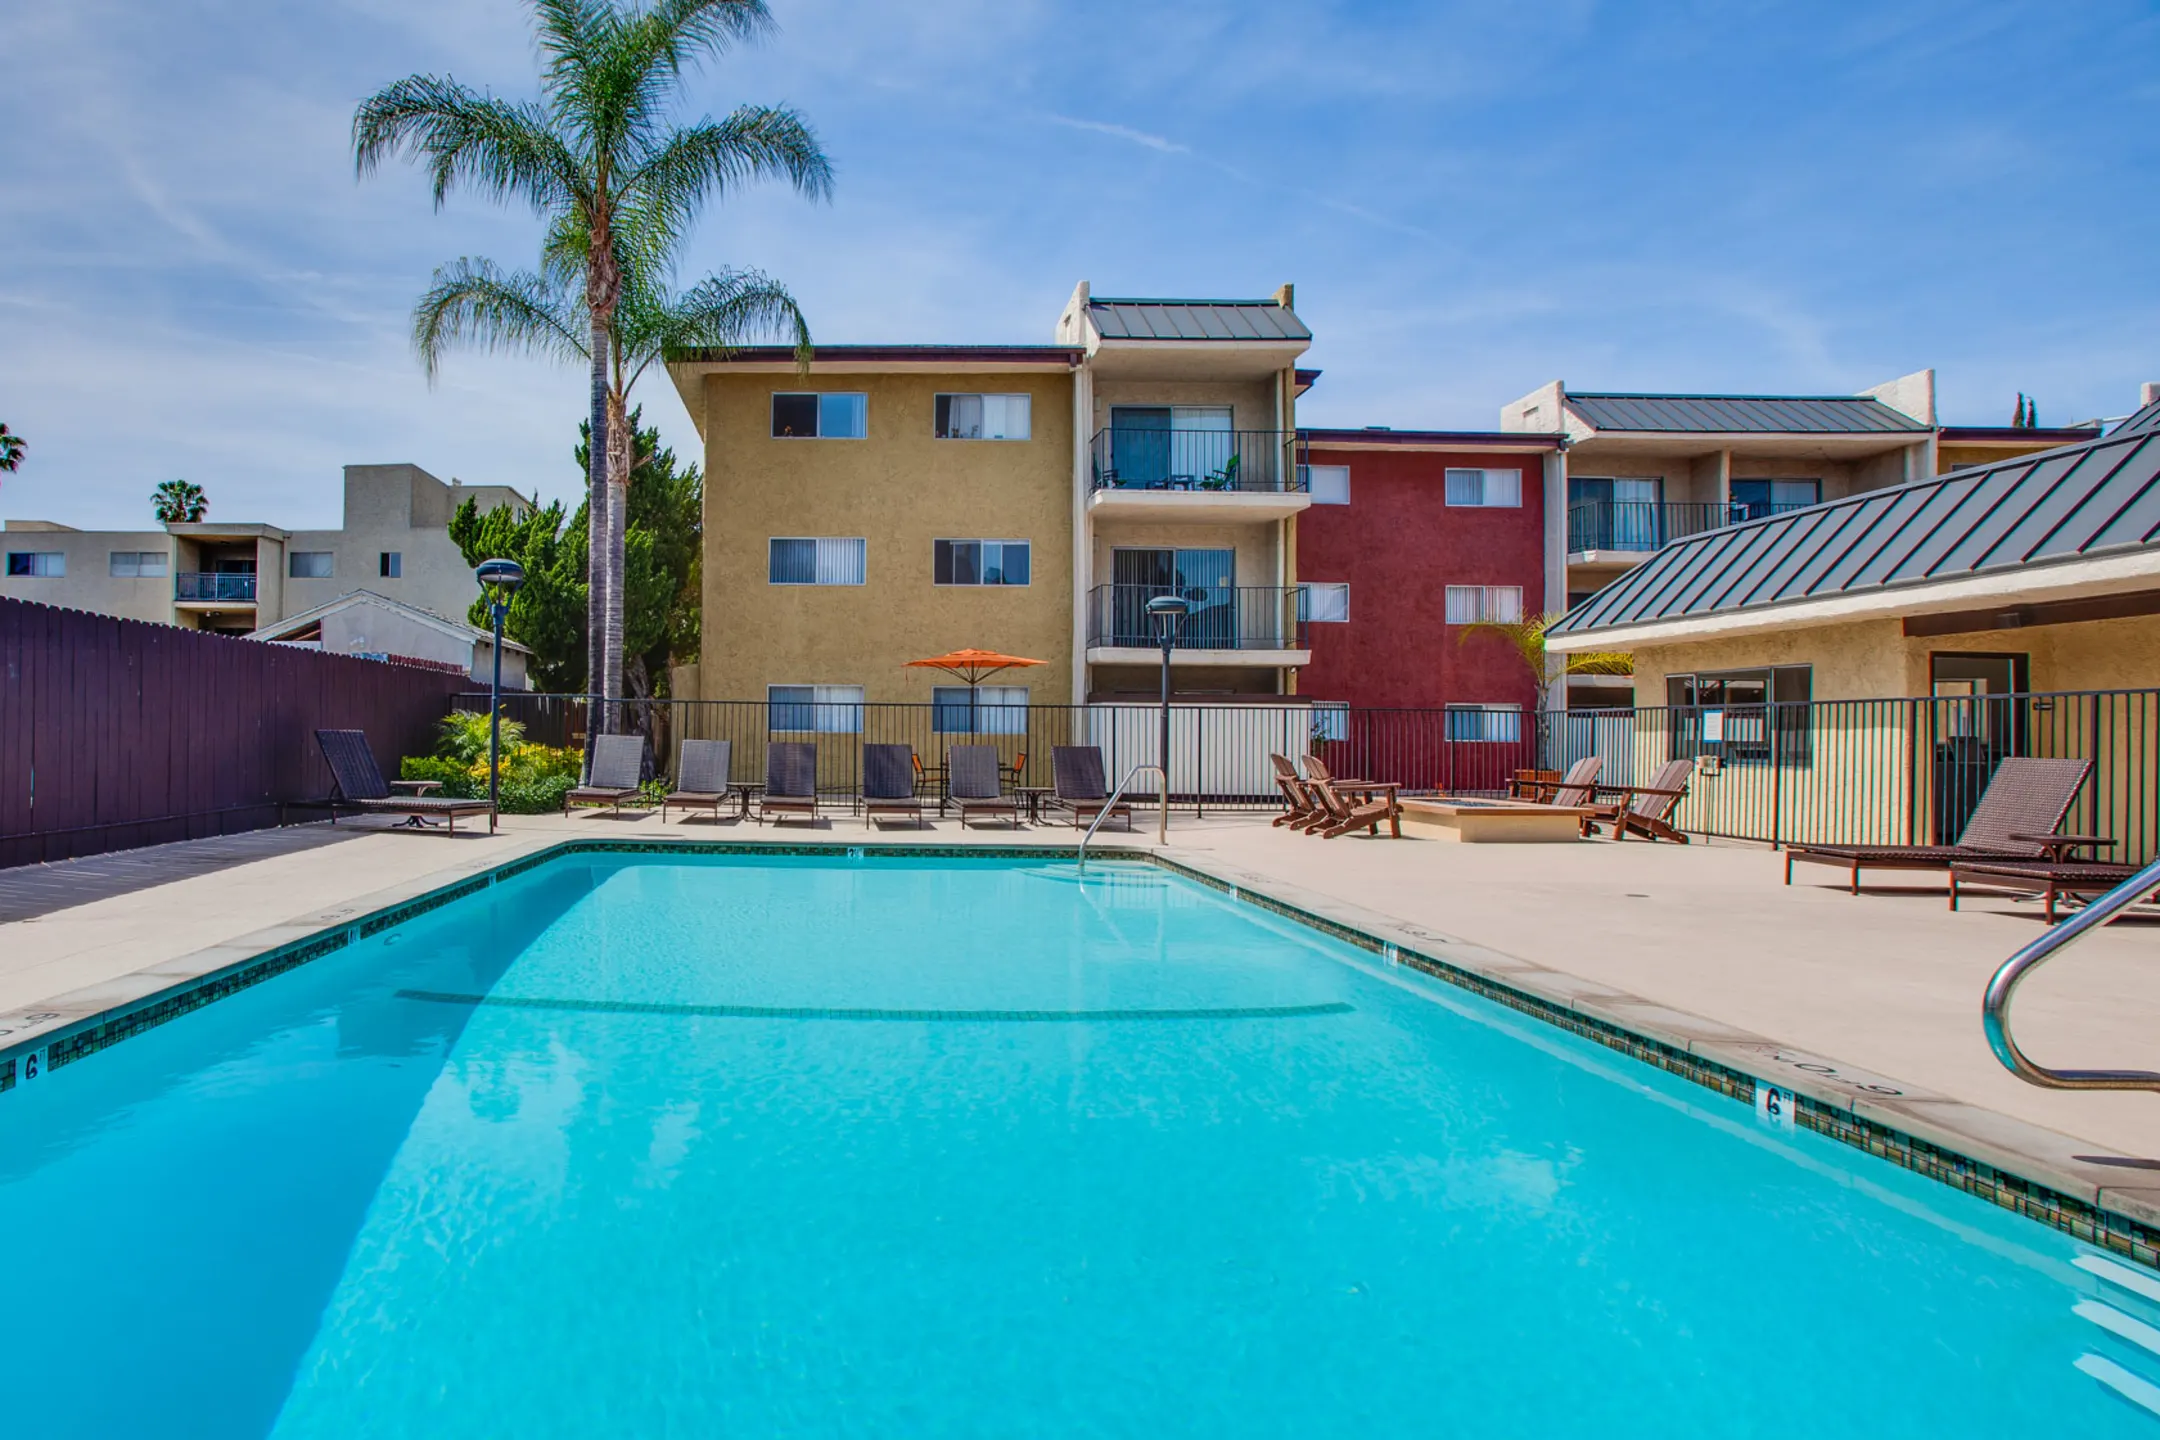 Pool - Villas of Pasadena Apartment Homes - Pasadena, CA